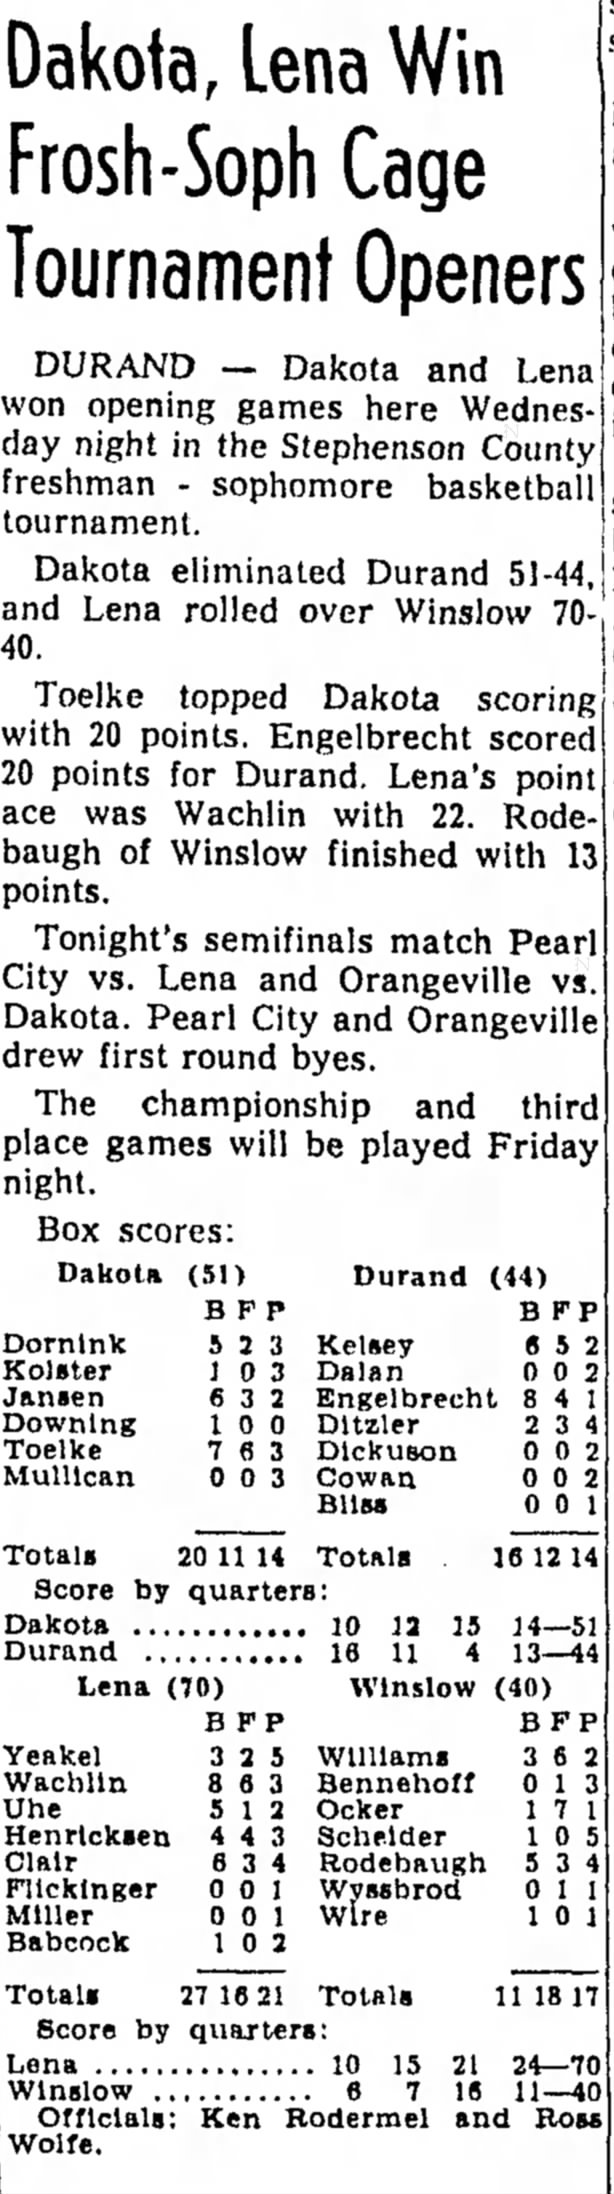 Freeport Journal-Standard, 10 March 1955, Dakota, Lena Win Frosh-Soph Cage Tournament Openers